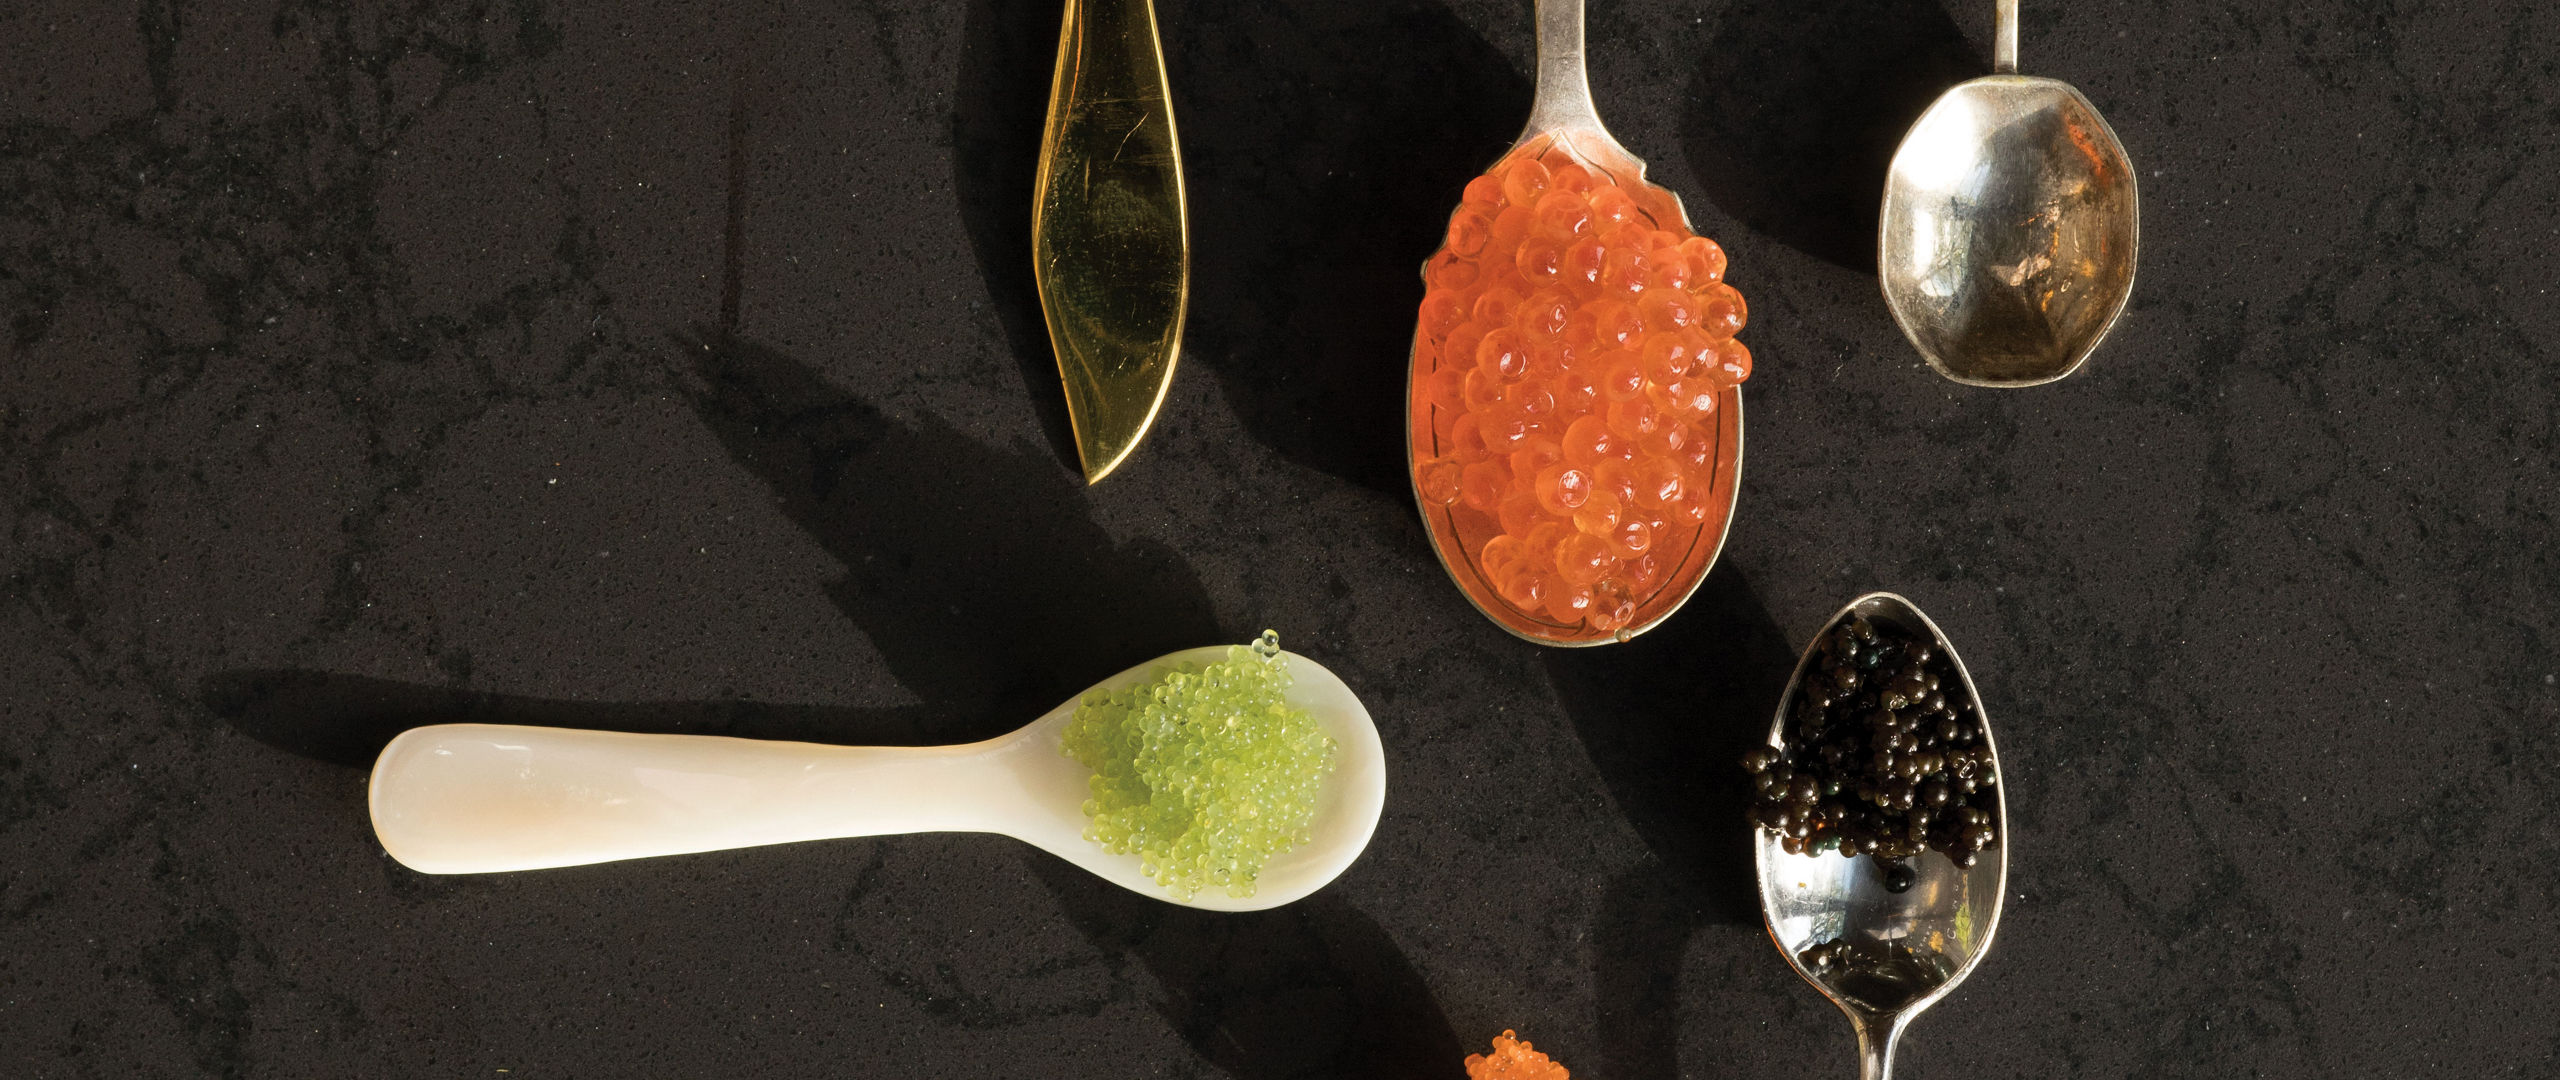 Caviar on spoons